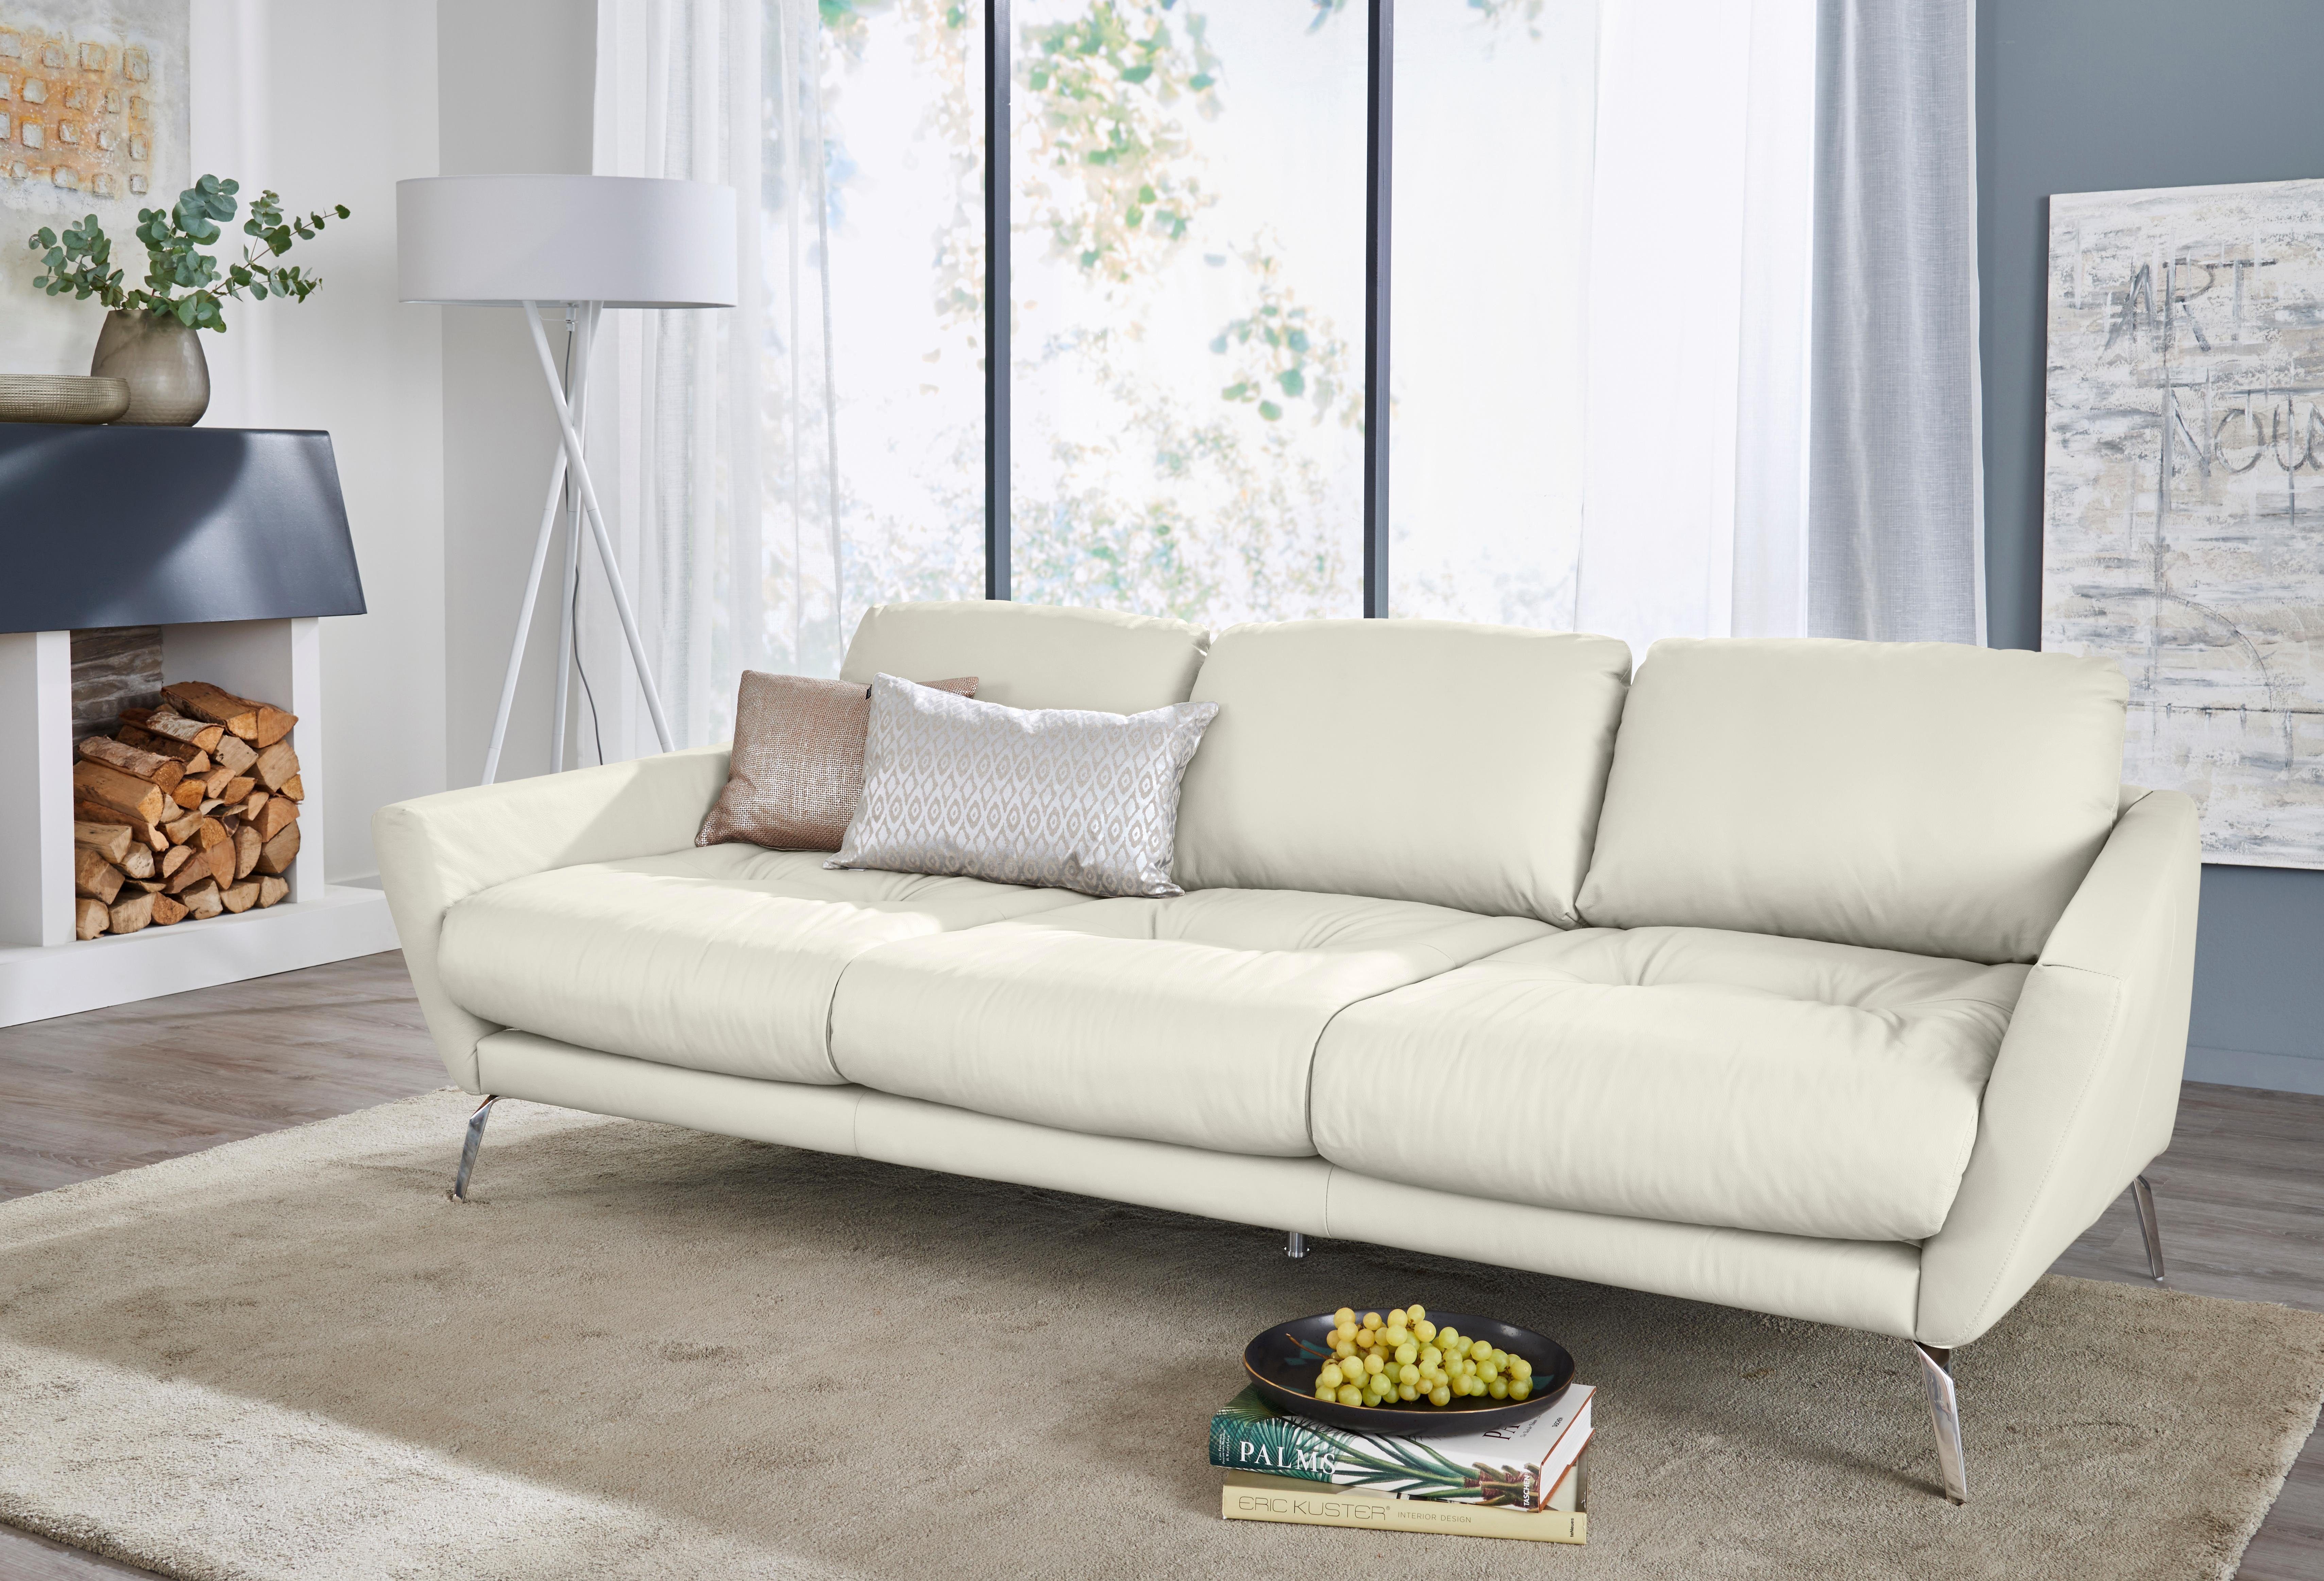 W.SCHILLIG Big-Sofa softy, mit dekorativer Heftung im Sitz, Füße Chrom glänzend